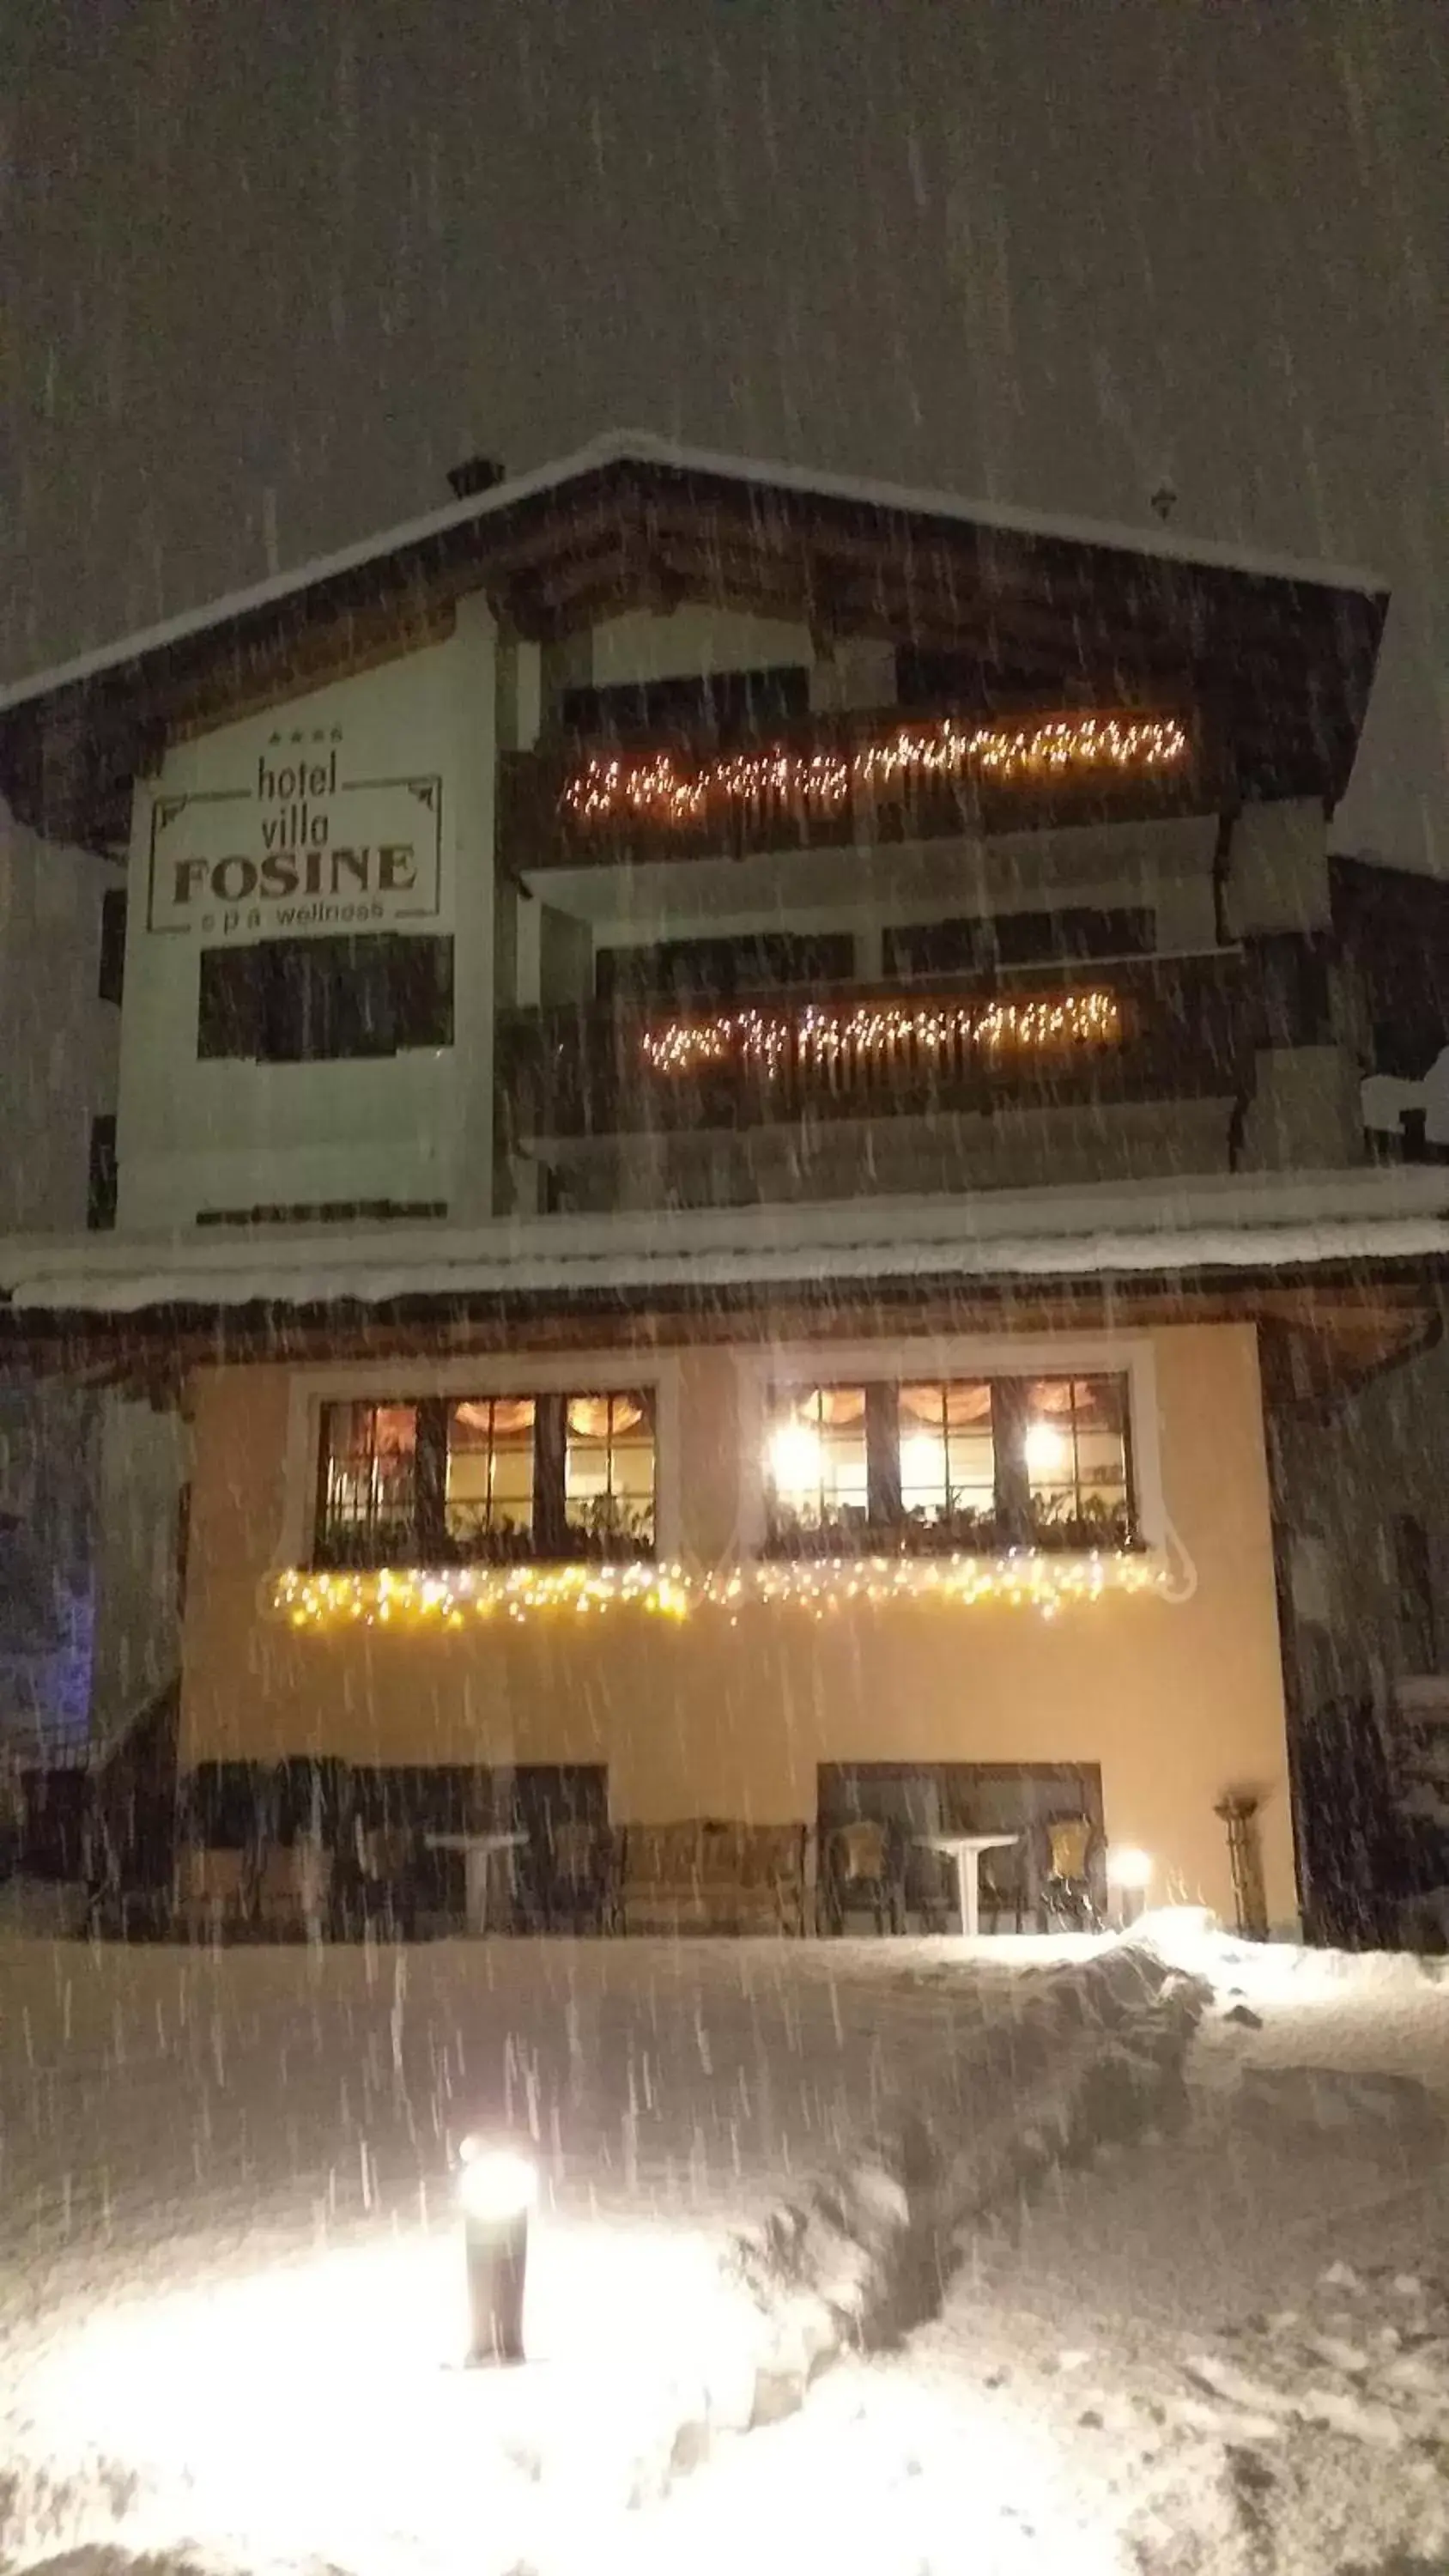 Winter in Hotel Villa Fosine